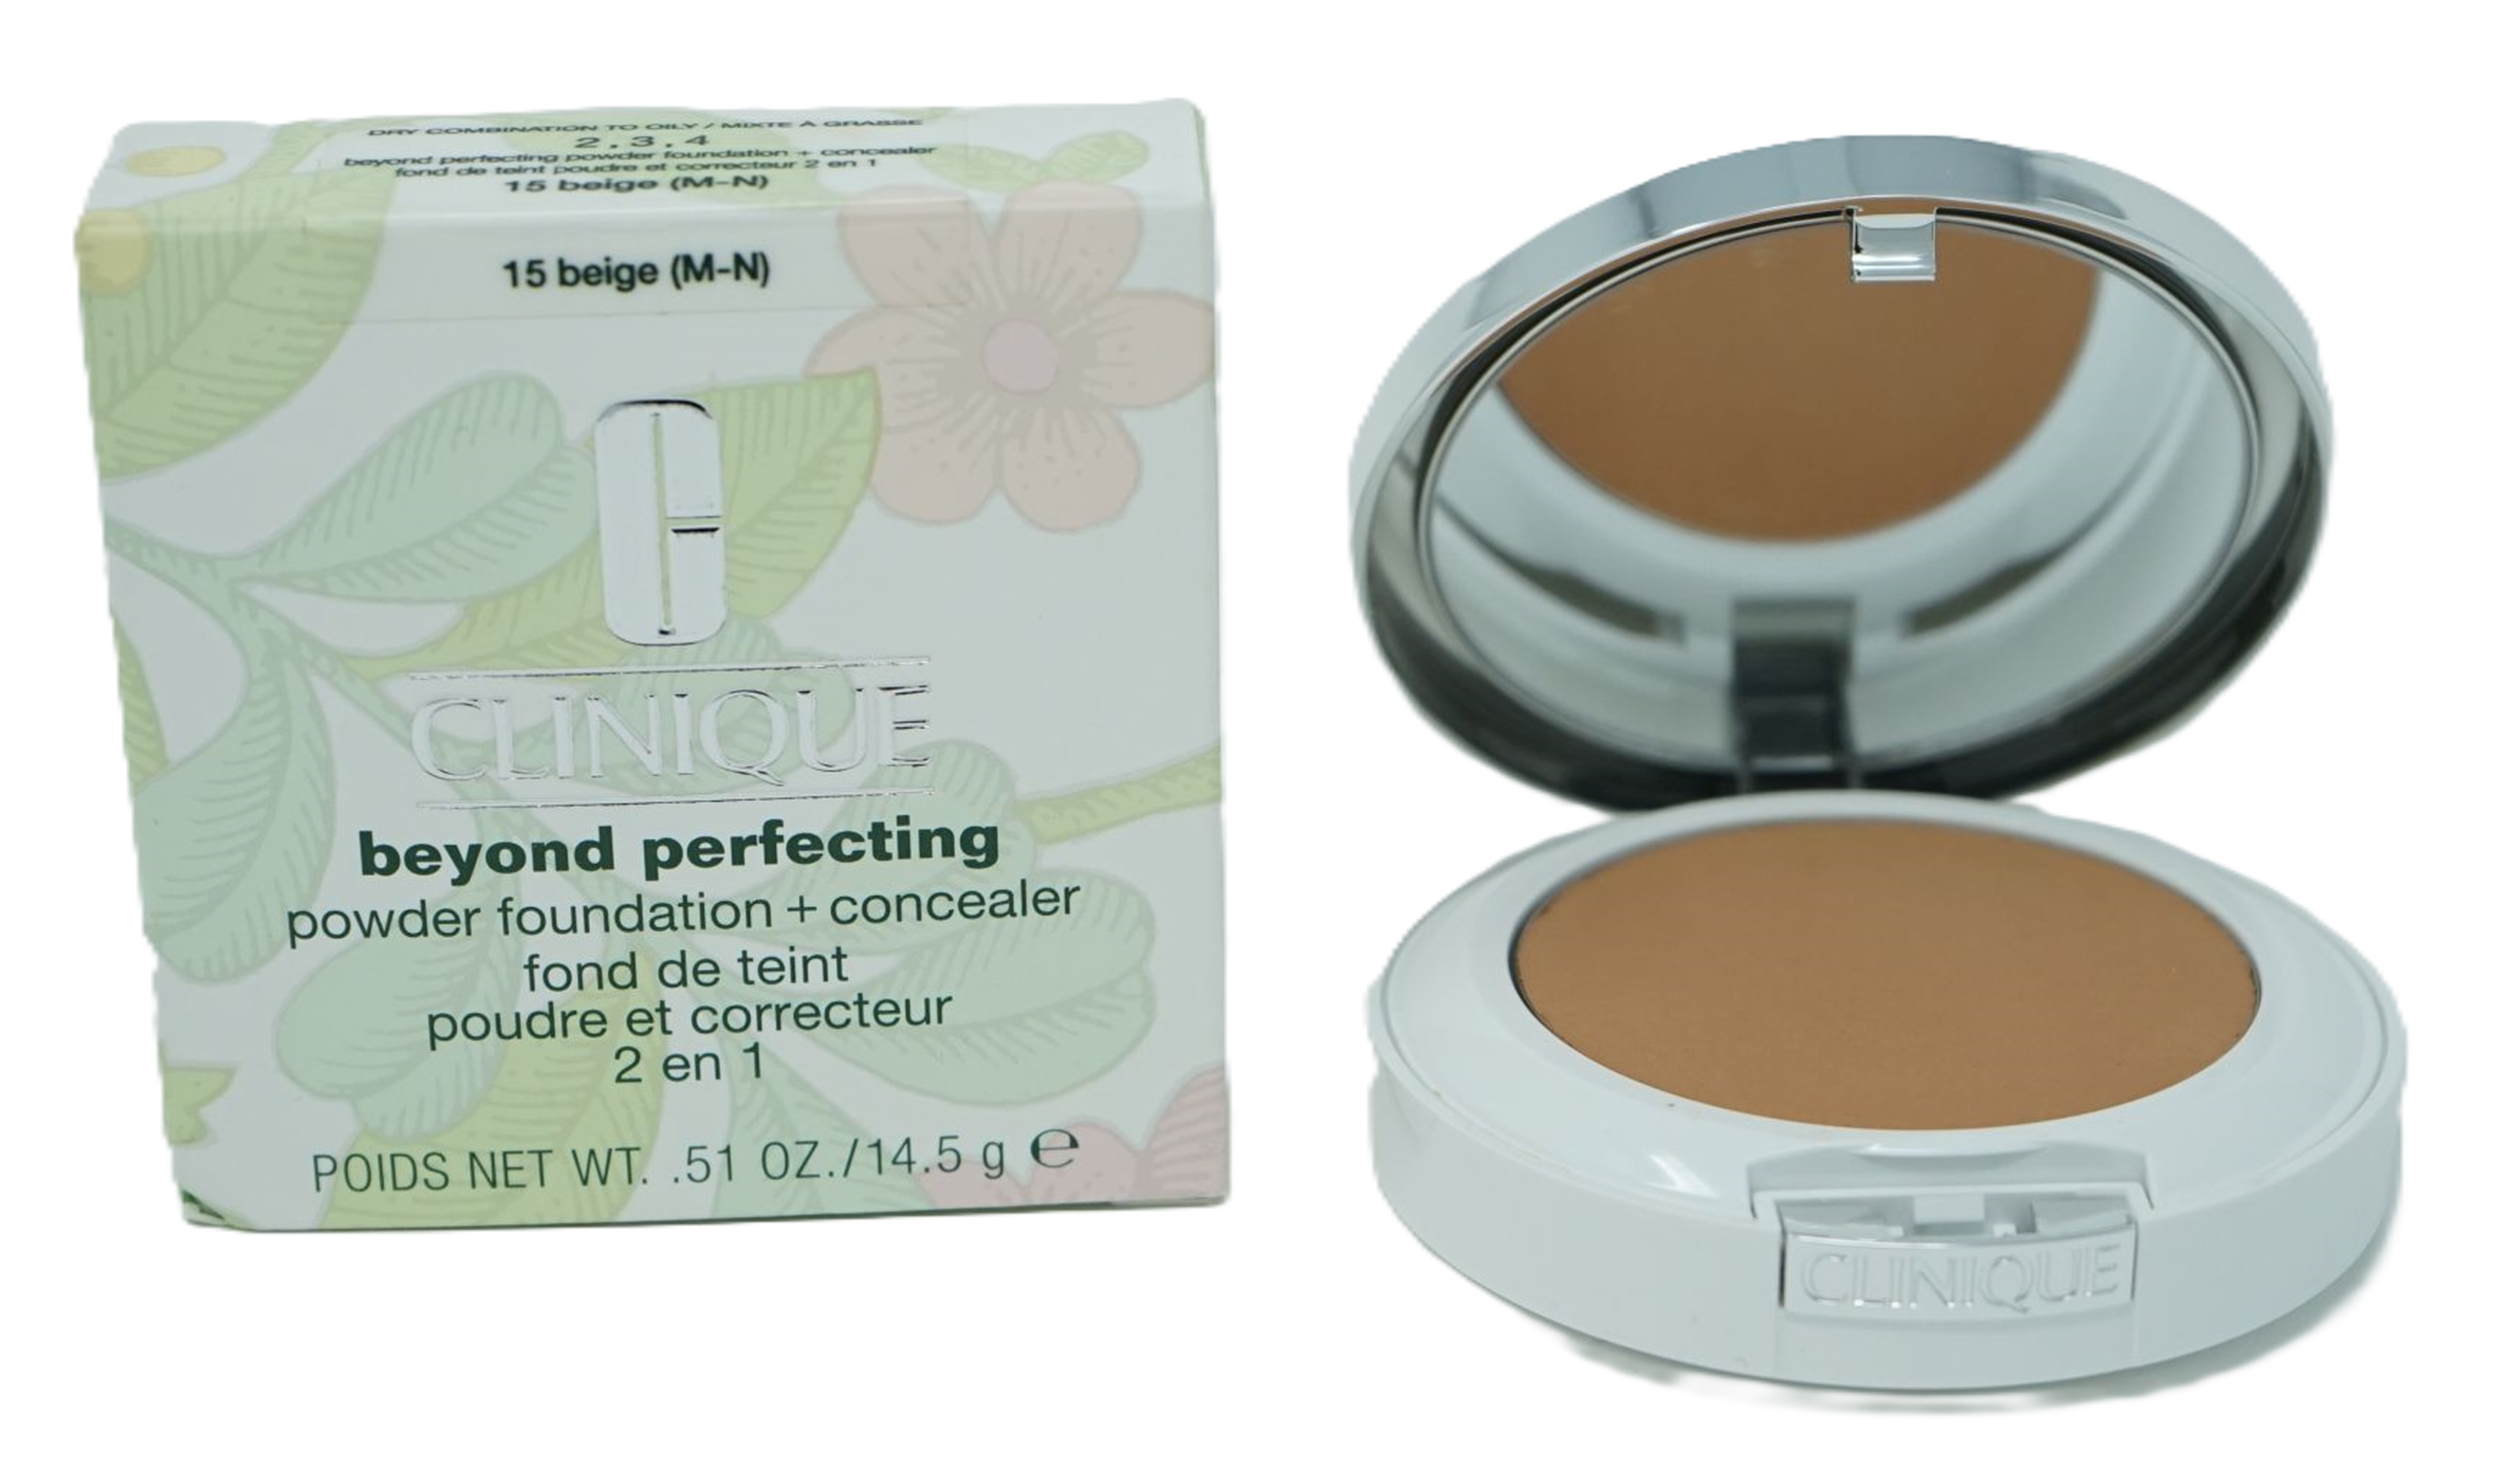 Clinique beyond perfecting powder foundation + concealer  15 beige (M-N)